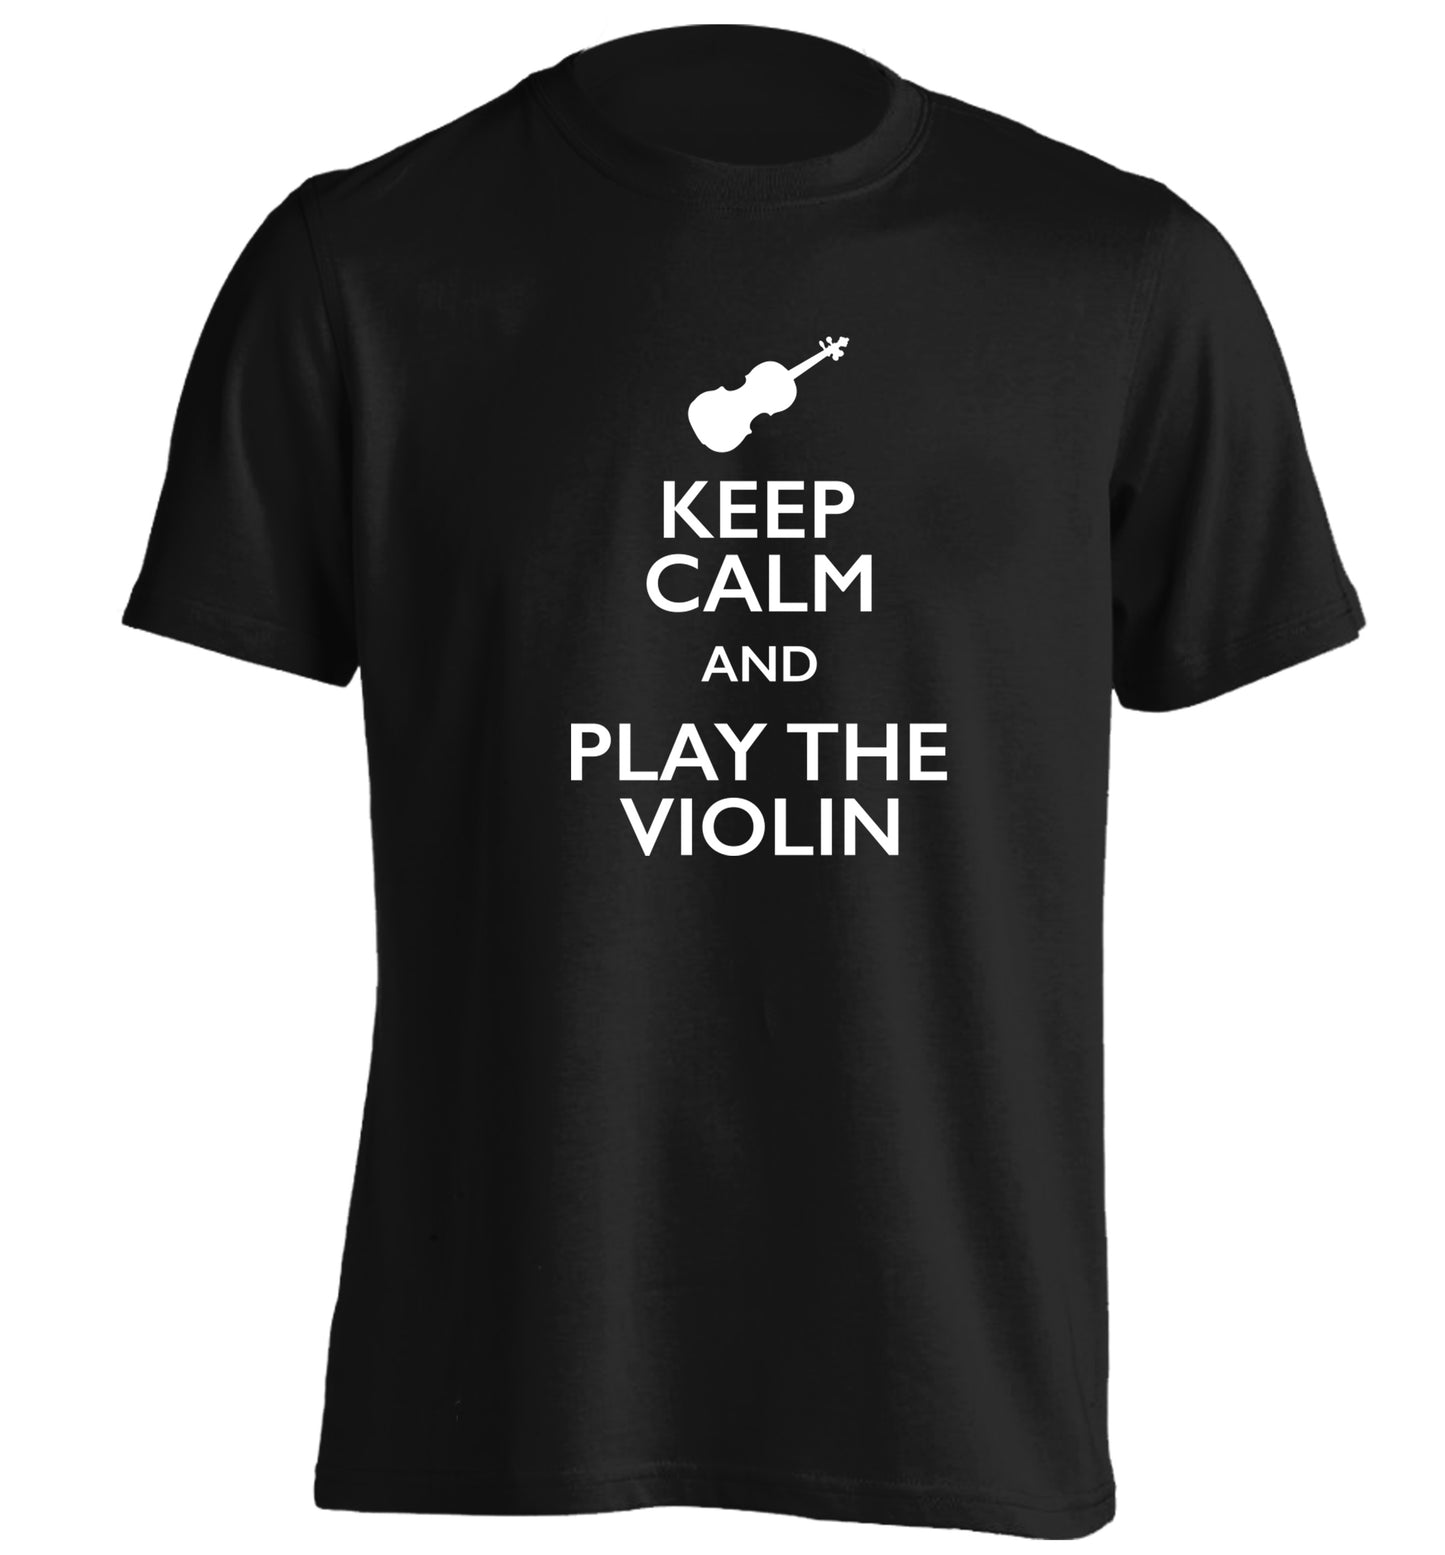 Keep calm and play the violin adults unisex black Tshirt 2XL